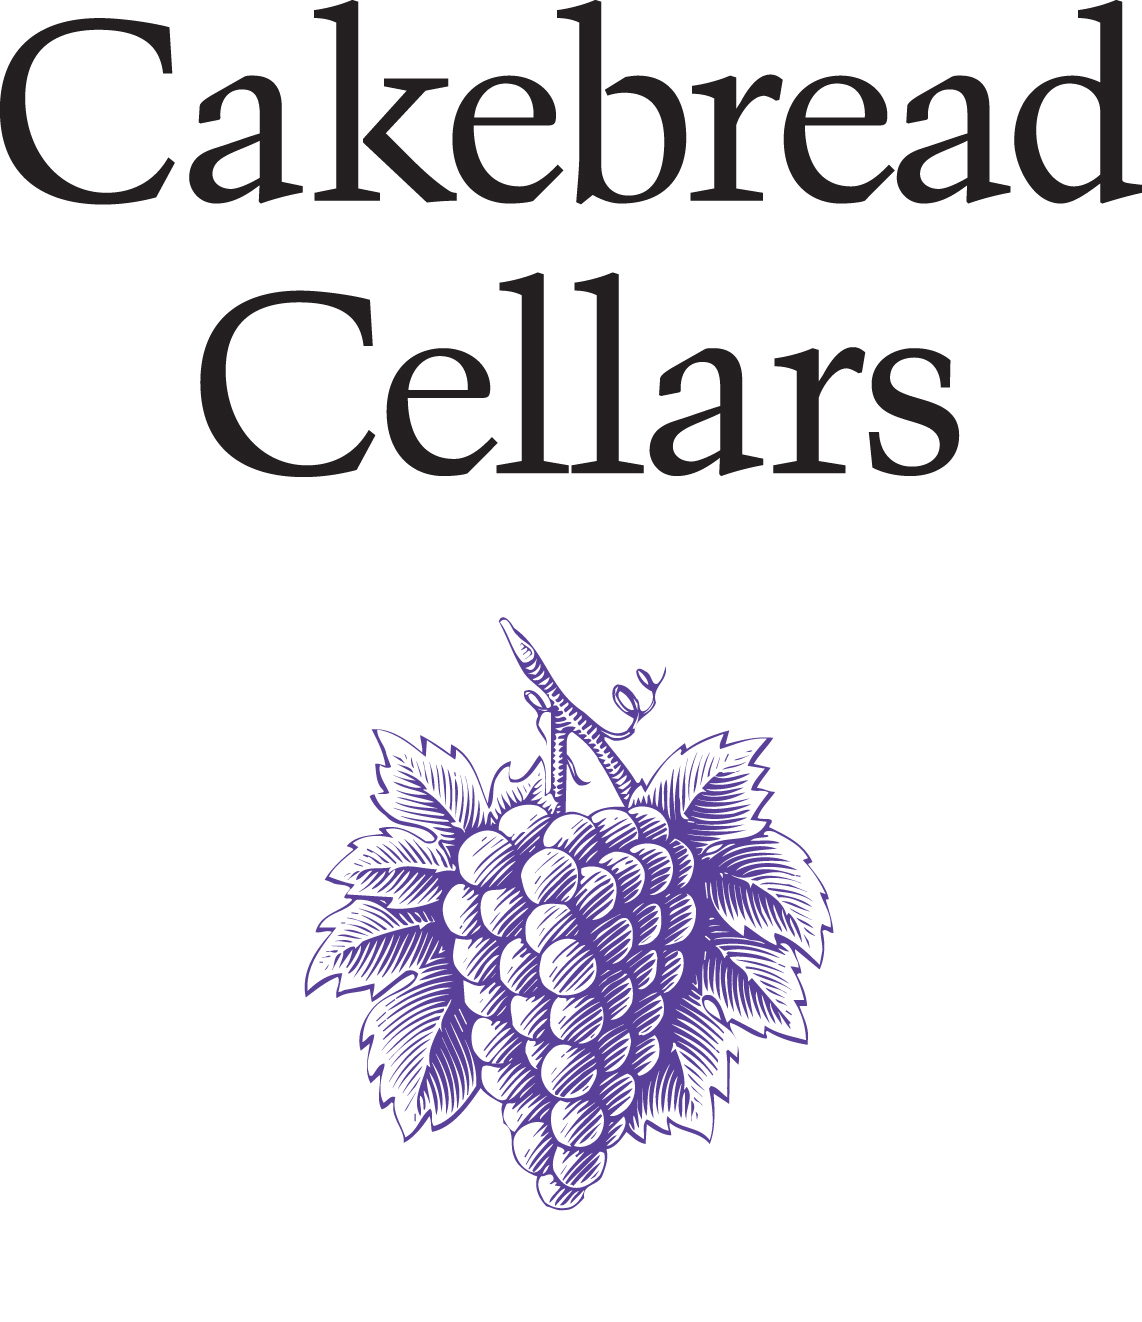 Cakebread_Cellars_logo(stackedcolor).jpg